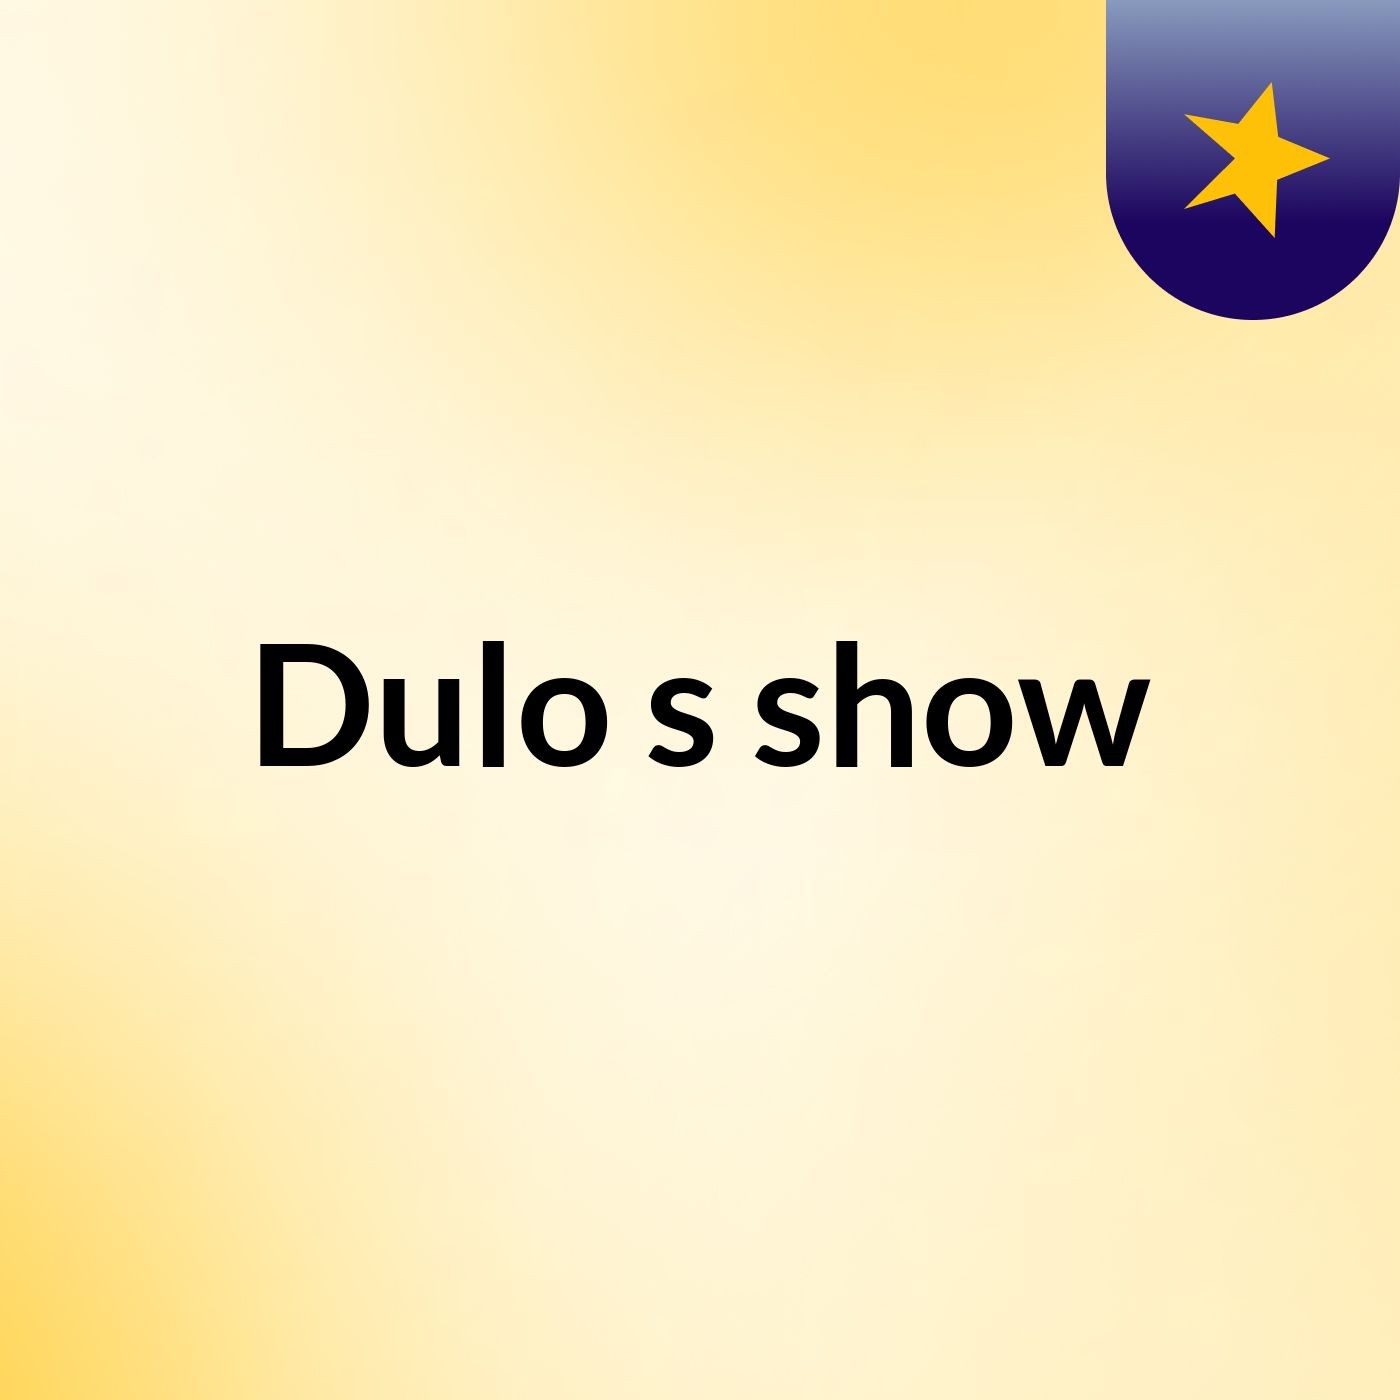 Dulo's show